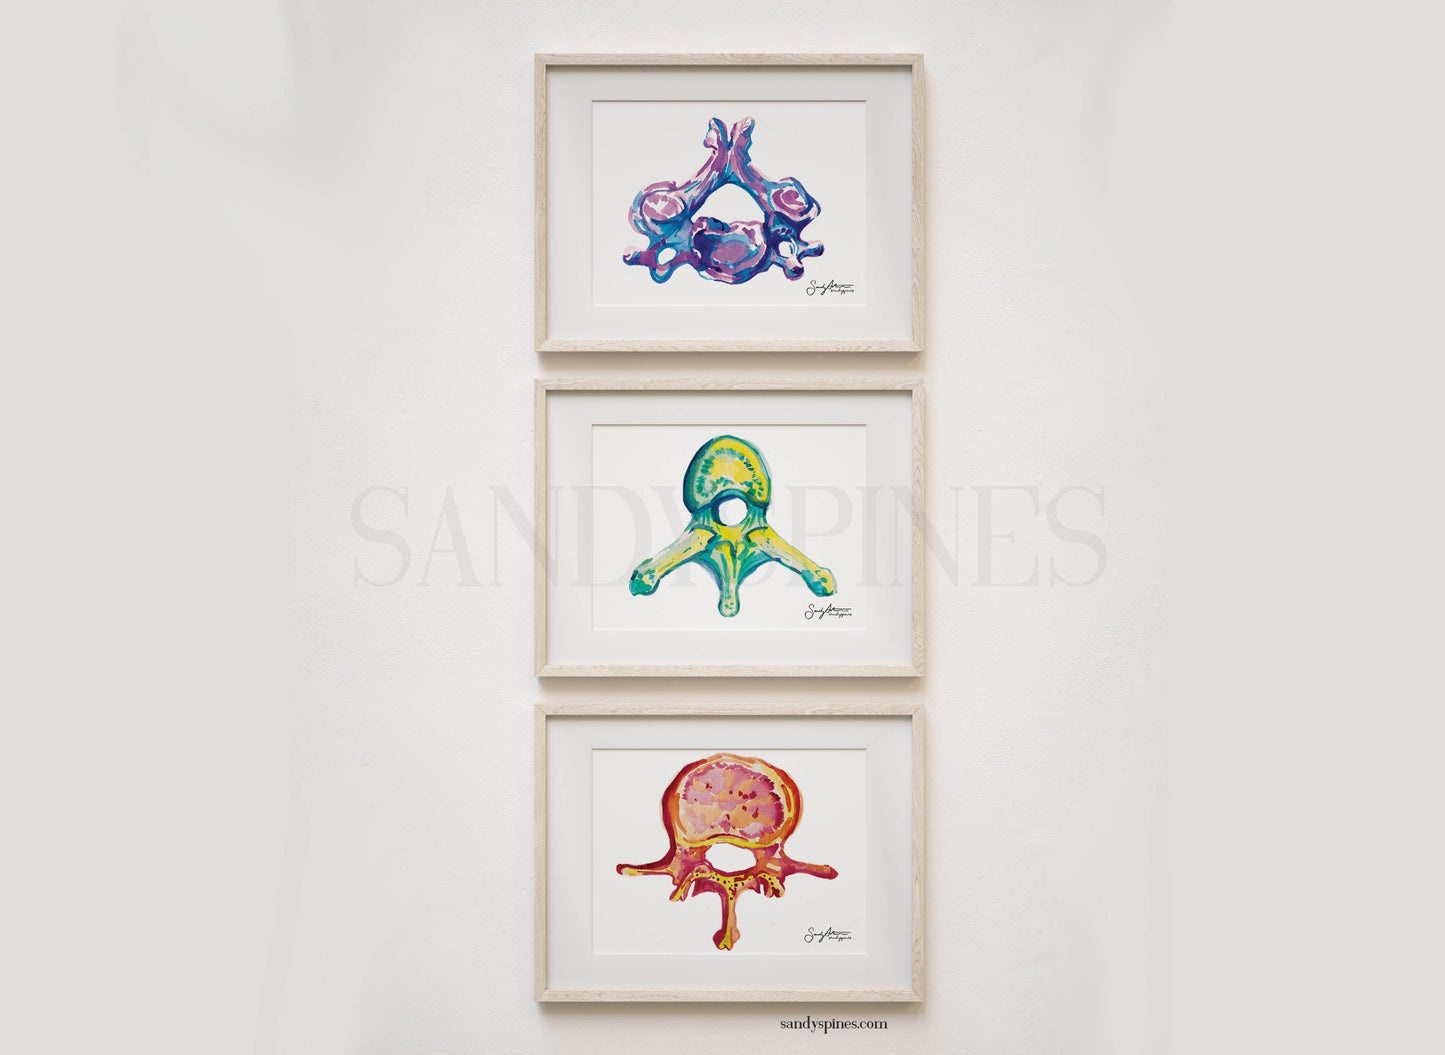 Cervical, thoracic, lumbar vertebrae anatomy art by SandySpines, chiropractor artist 